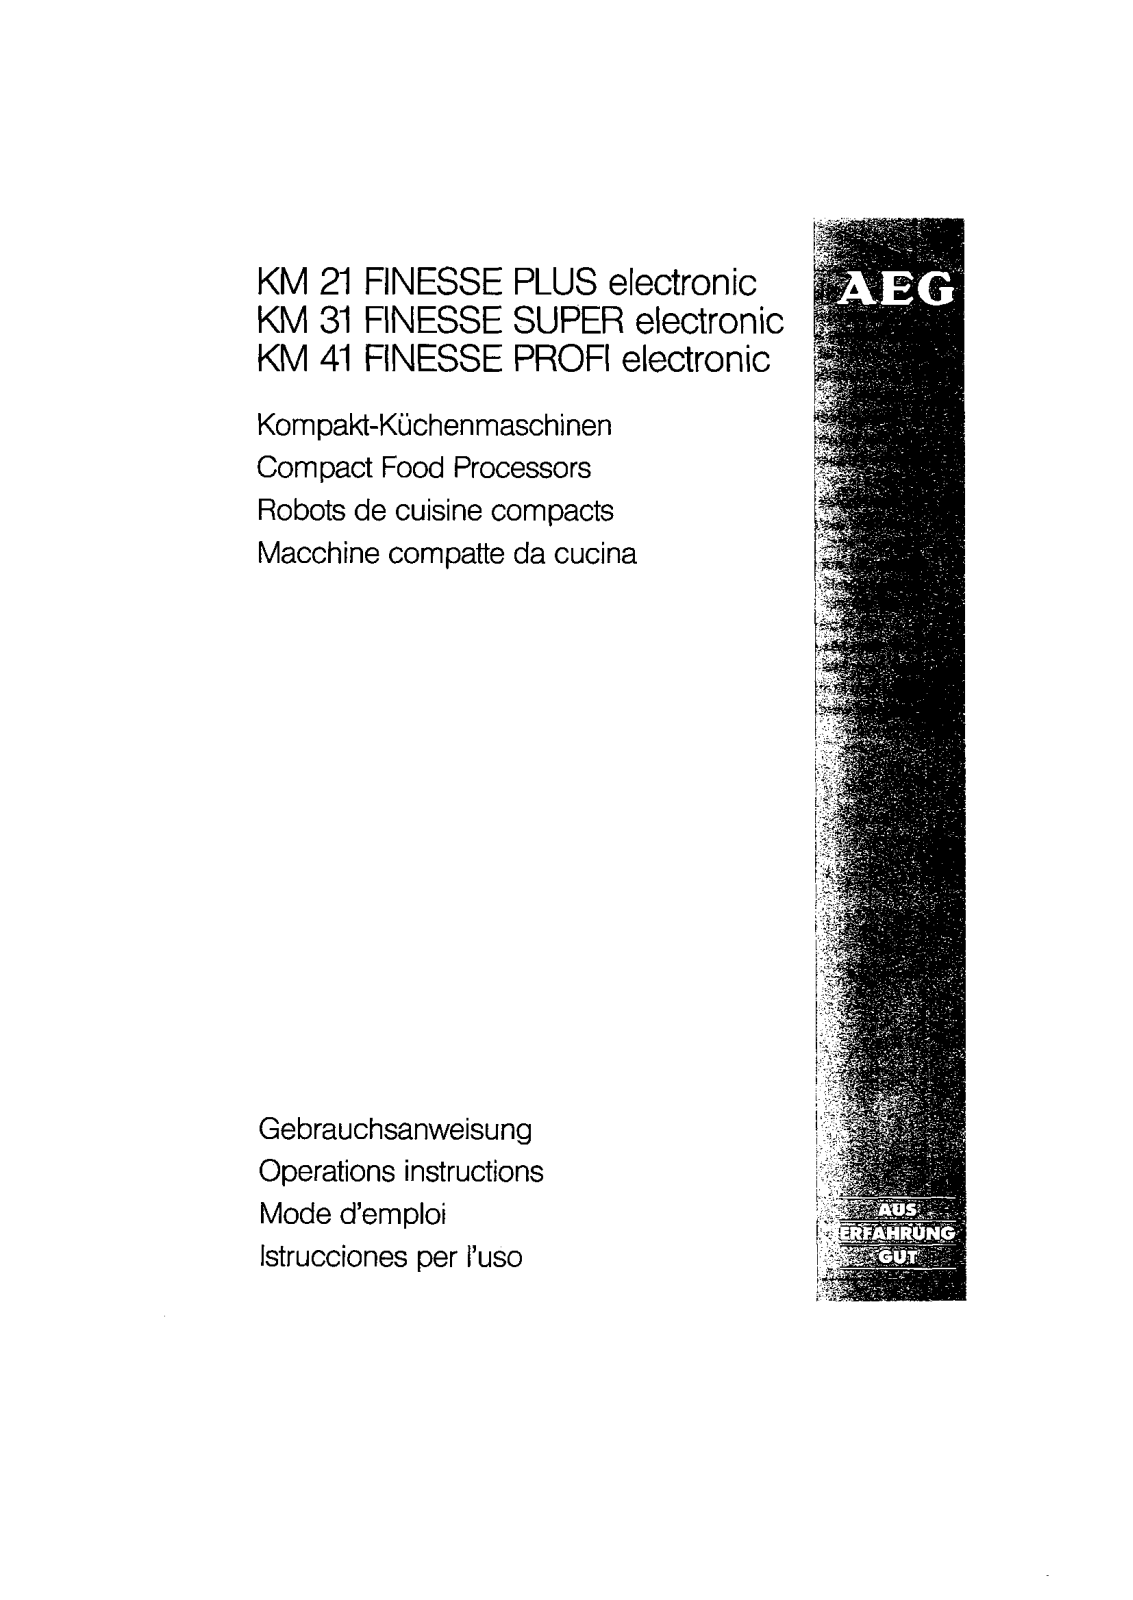 Electrolux KM21 FINESSE PLUS ELECTRONIC, KM31 FINESSE SUPER ELECTRONIC, KM41 FINESSE PROFI ELECTRONIC User Manual